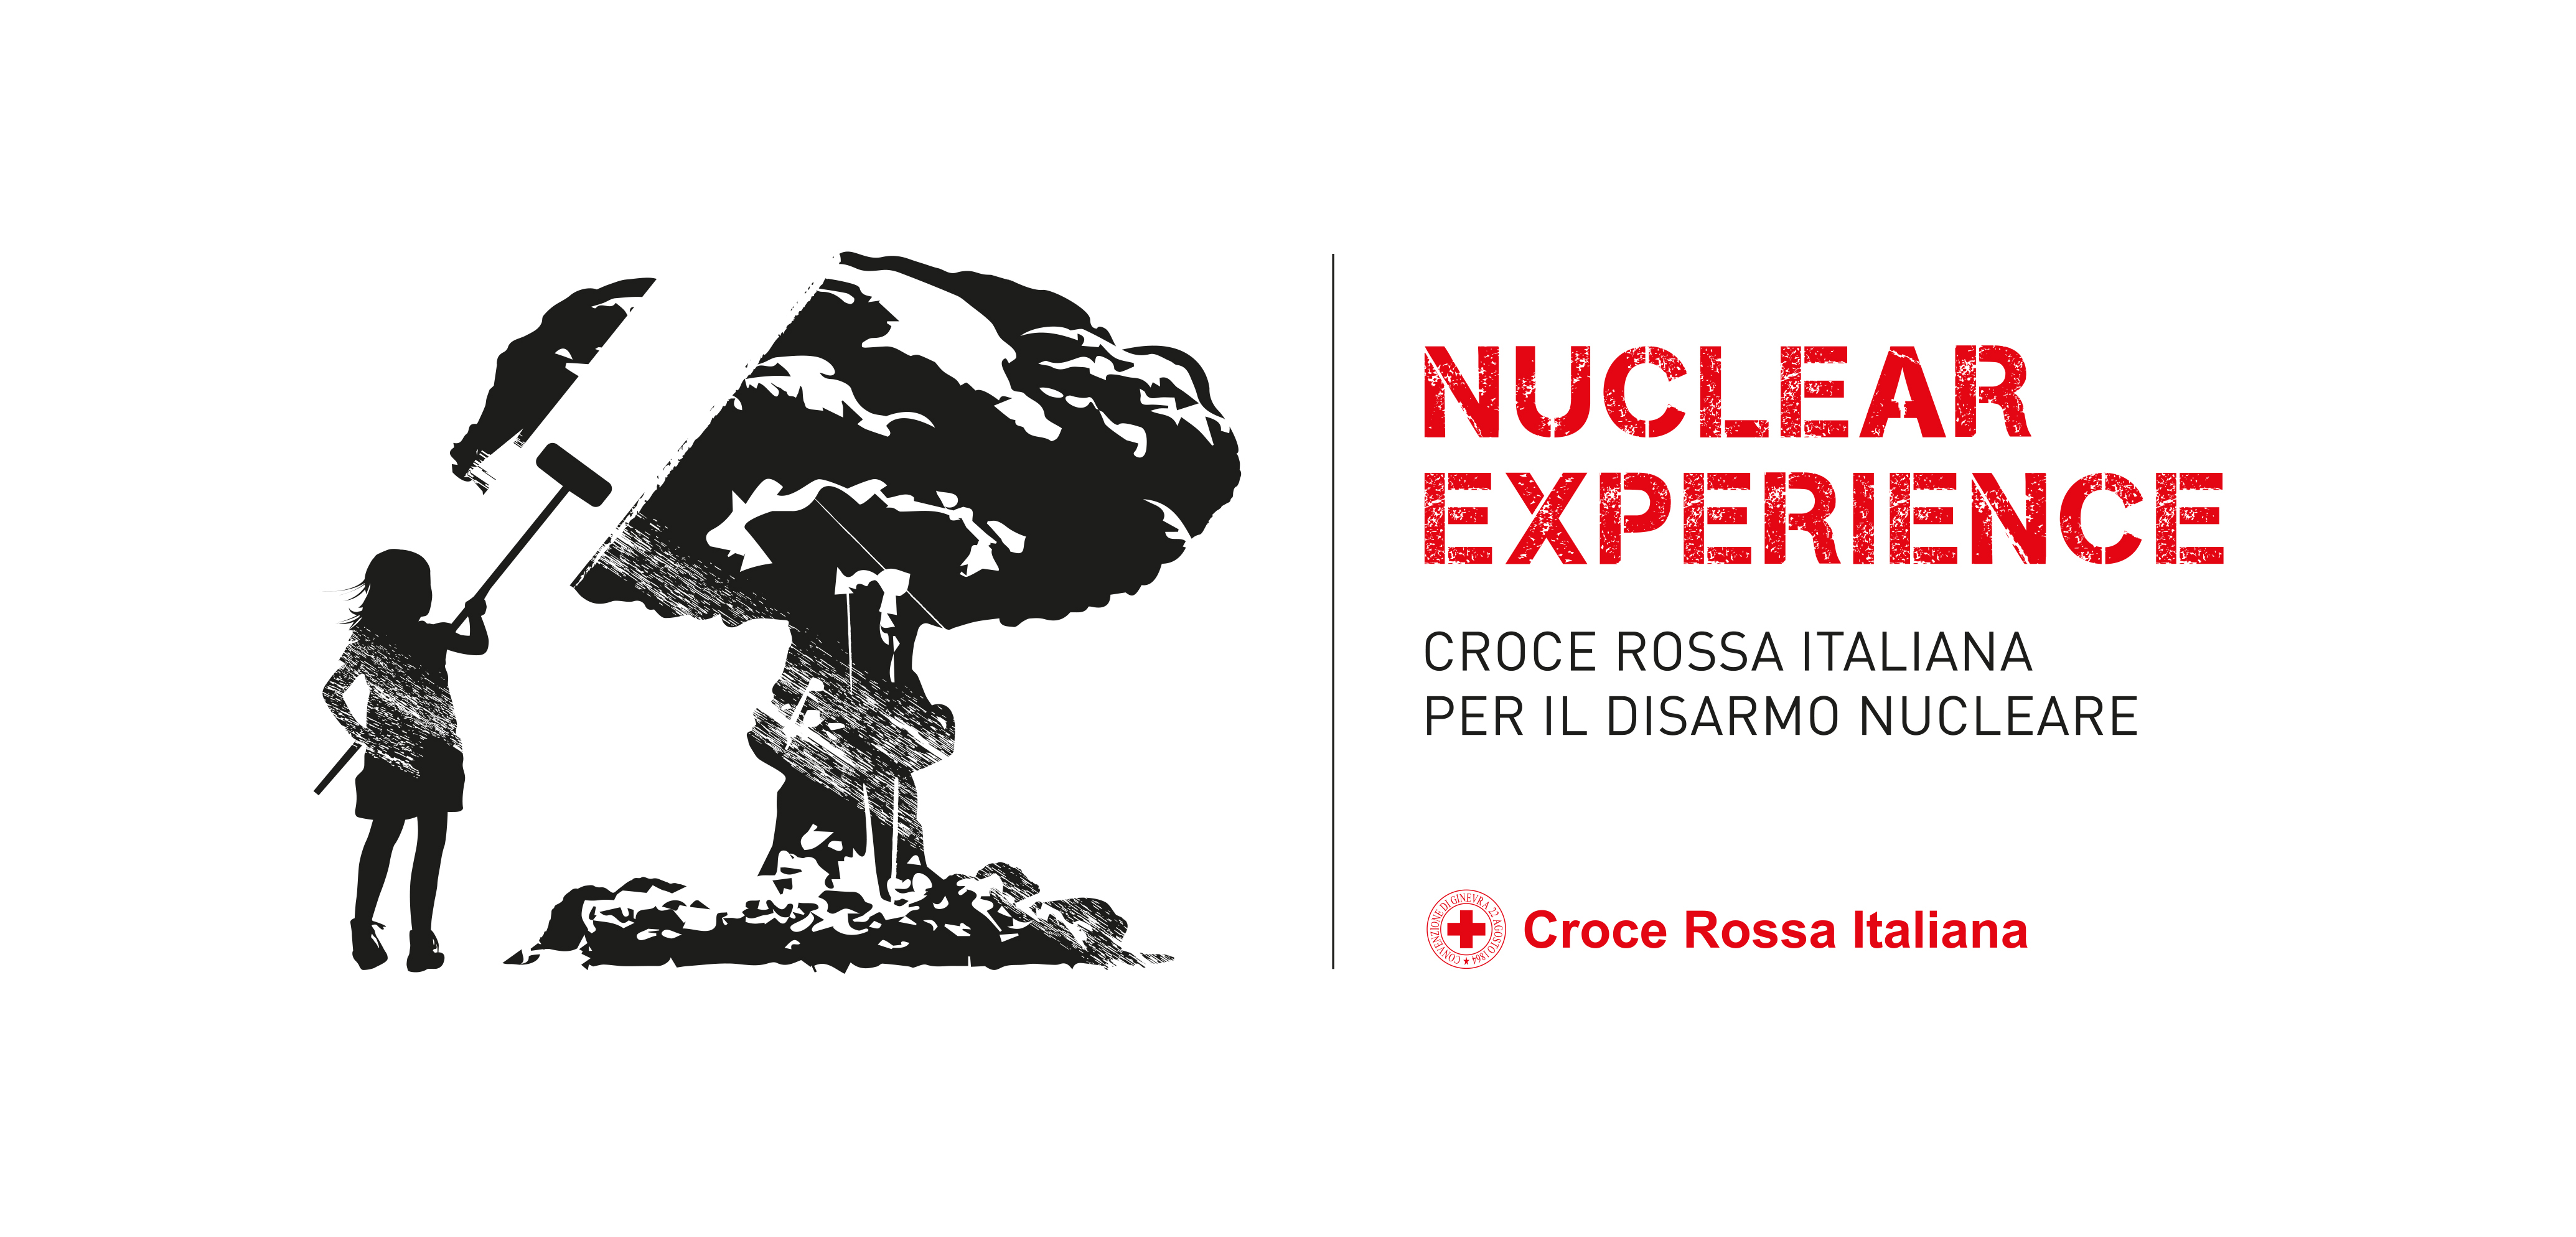 Croce Rossa Italiana logo nuclear experience